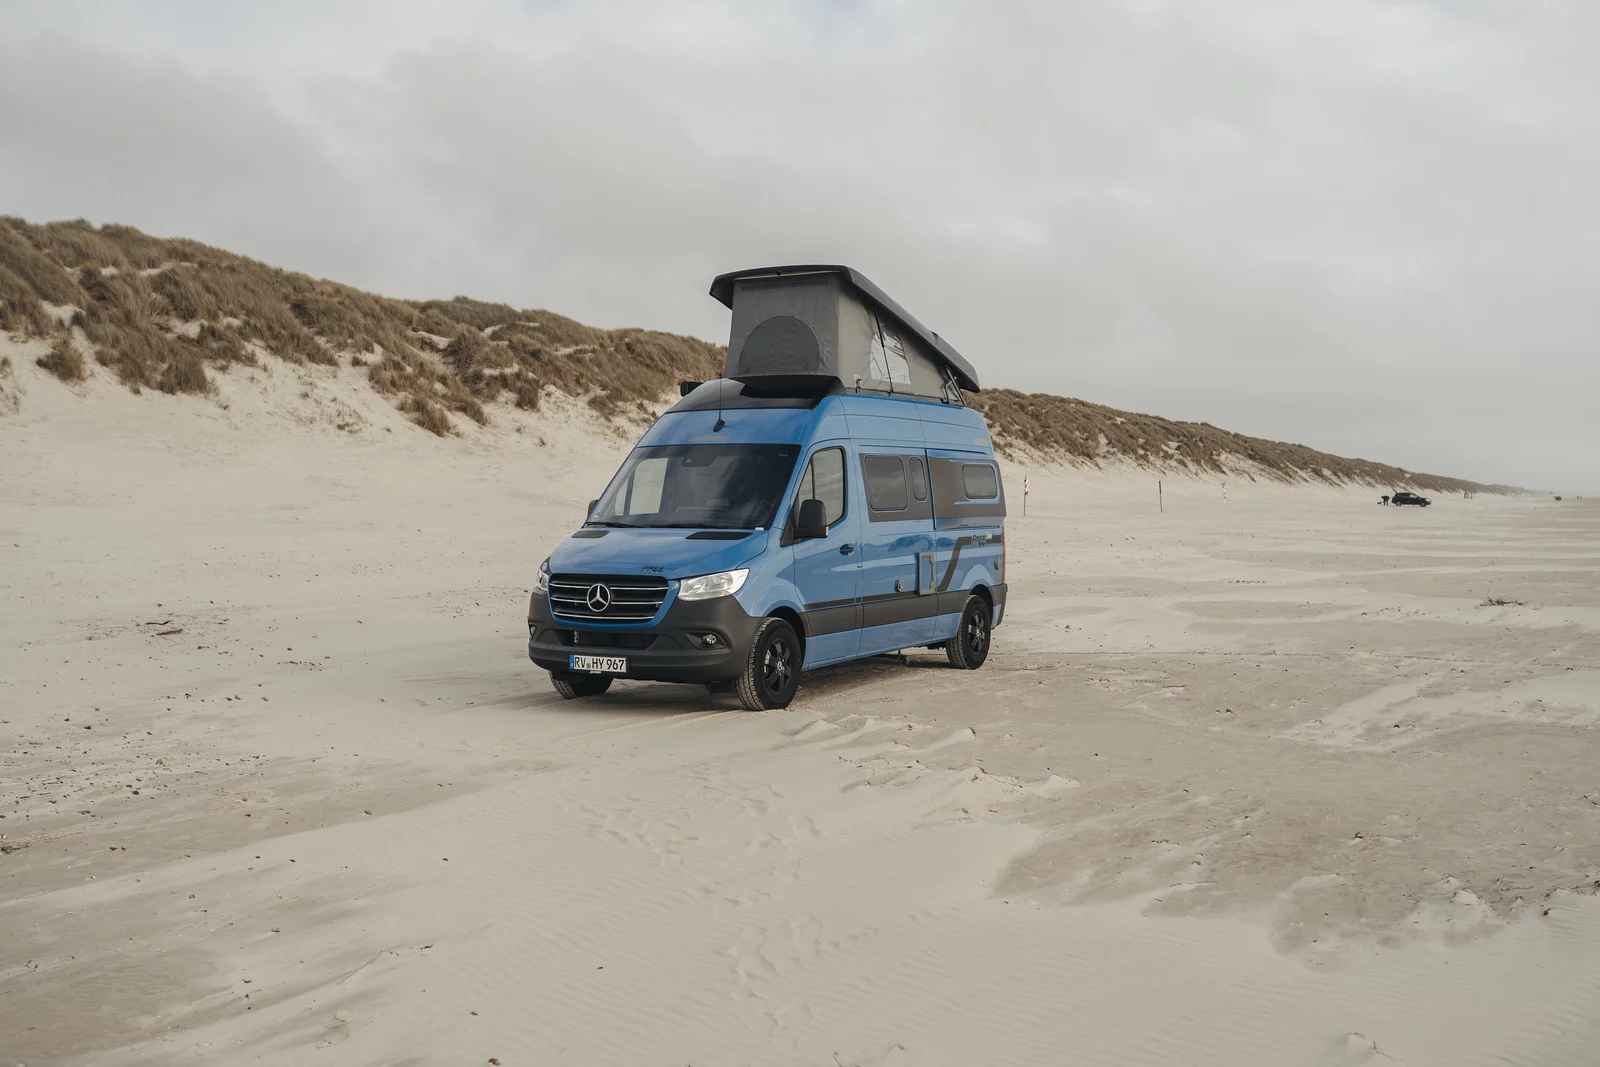 Hymer Free S 600 Blue Evolution - Camping Car / caravane à moteur